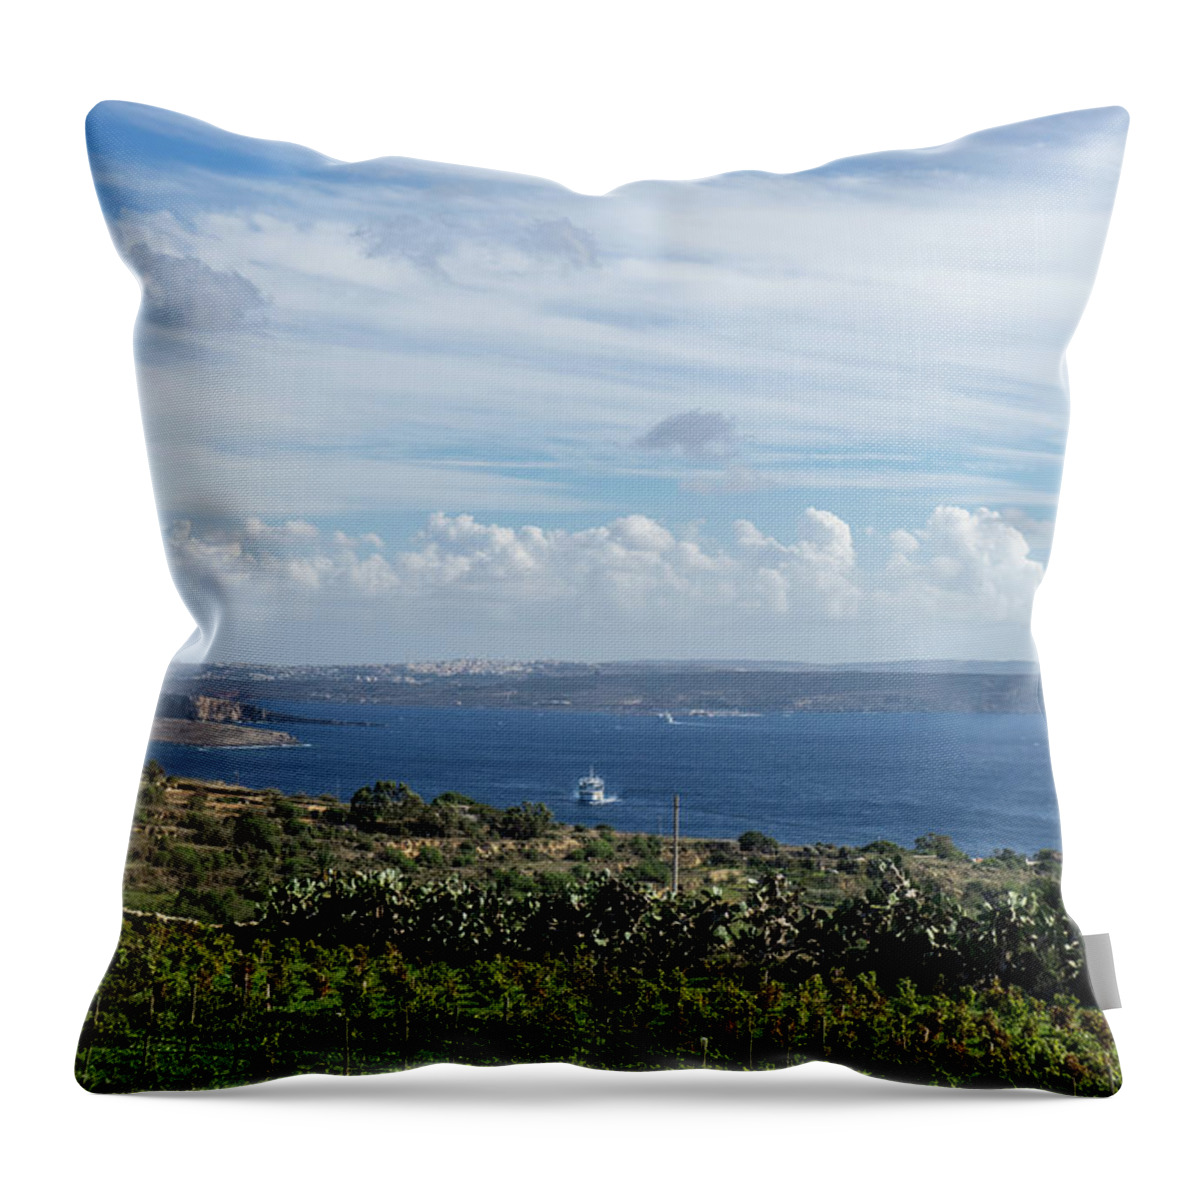 Gozo Island Throw Pillow featuring the photograph Rural Gozo Island - Maltese Archipelago Green Countryside by Georgia Mizuleva